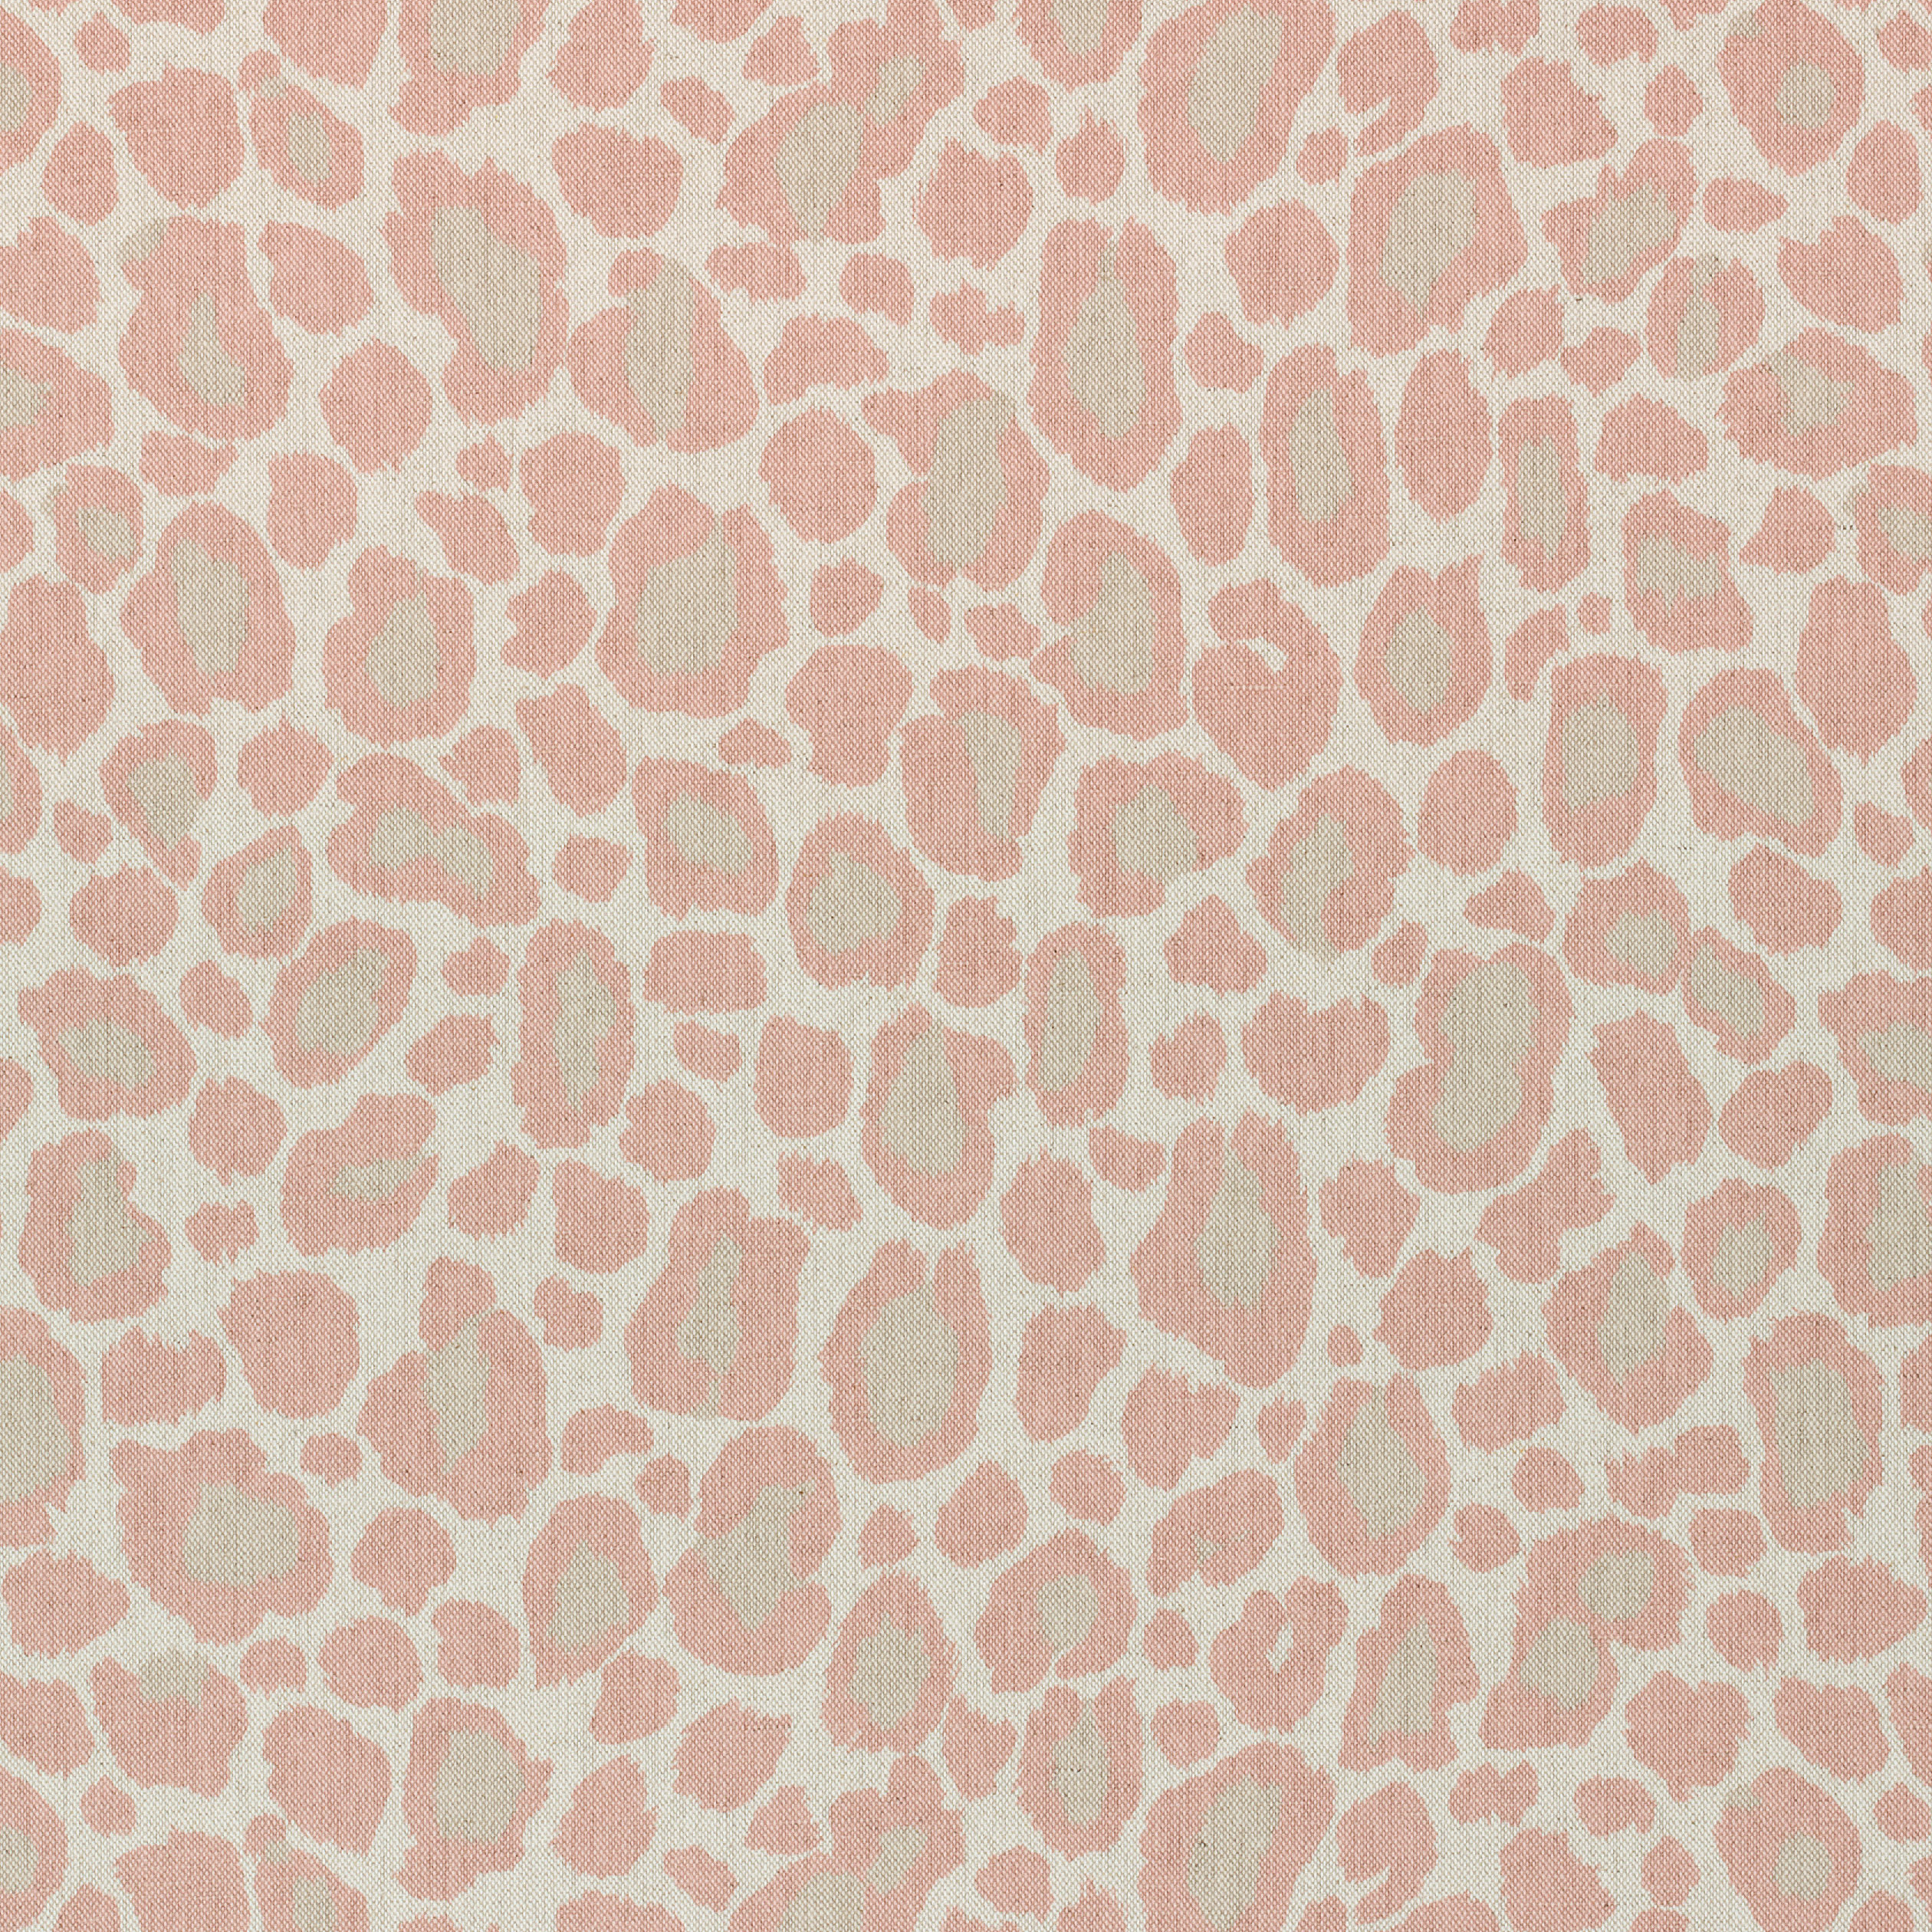 19+ Pink Leopard Print Fabric